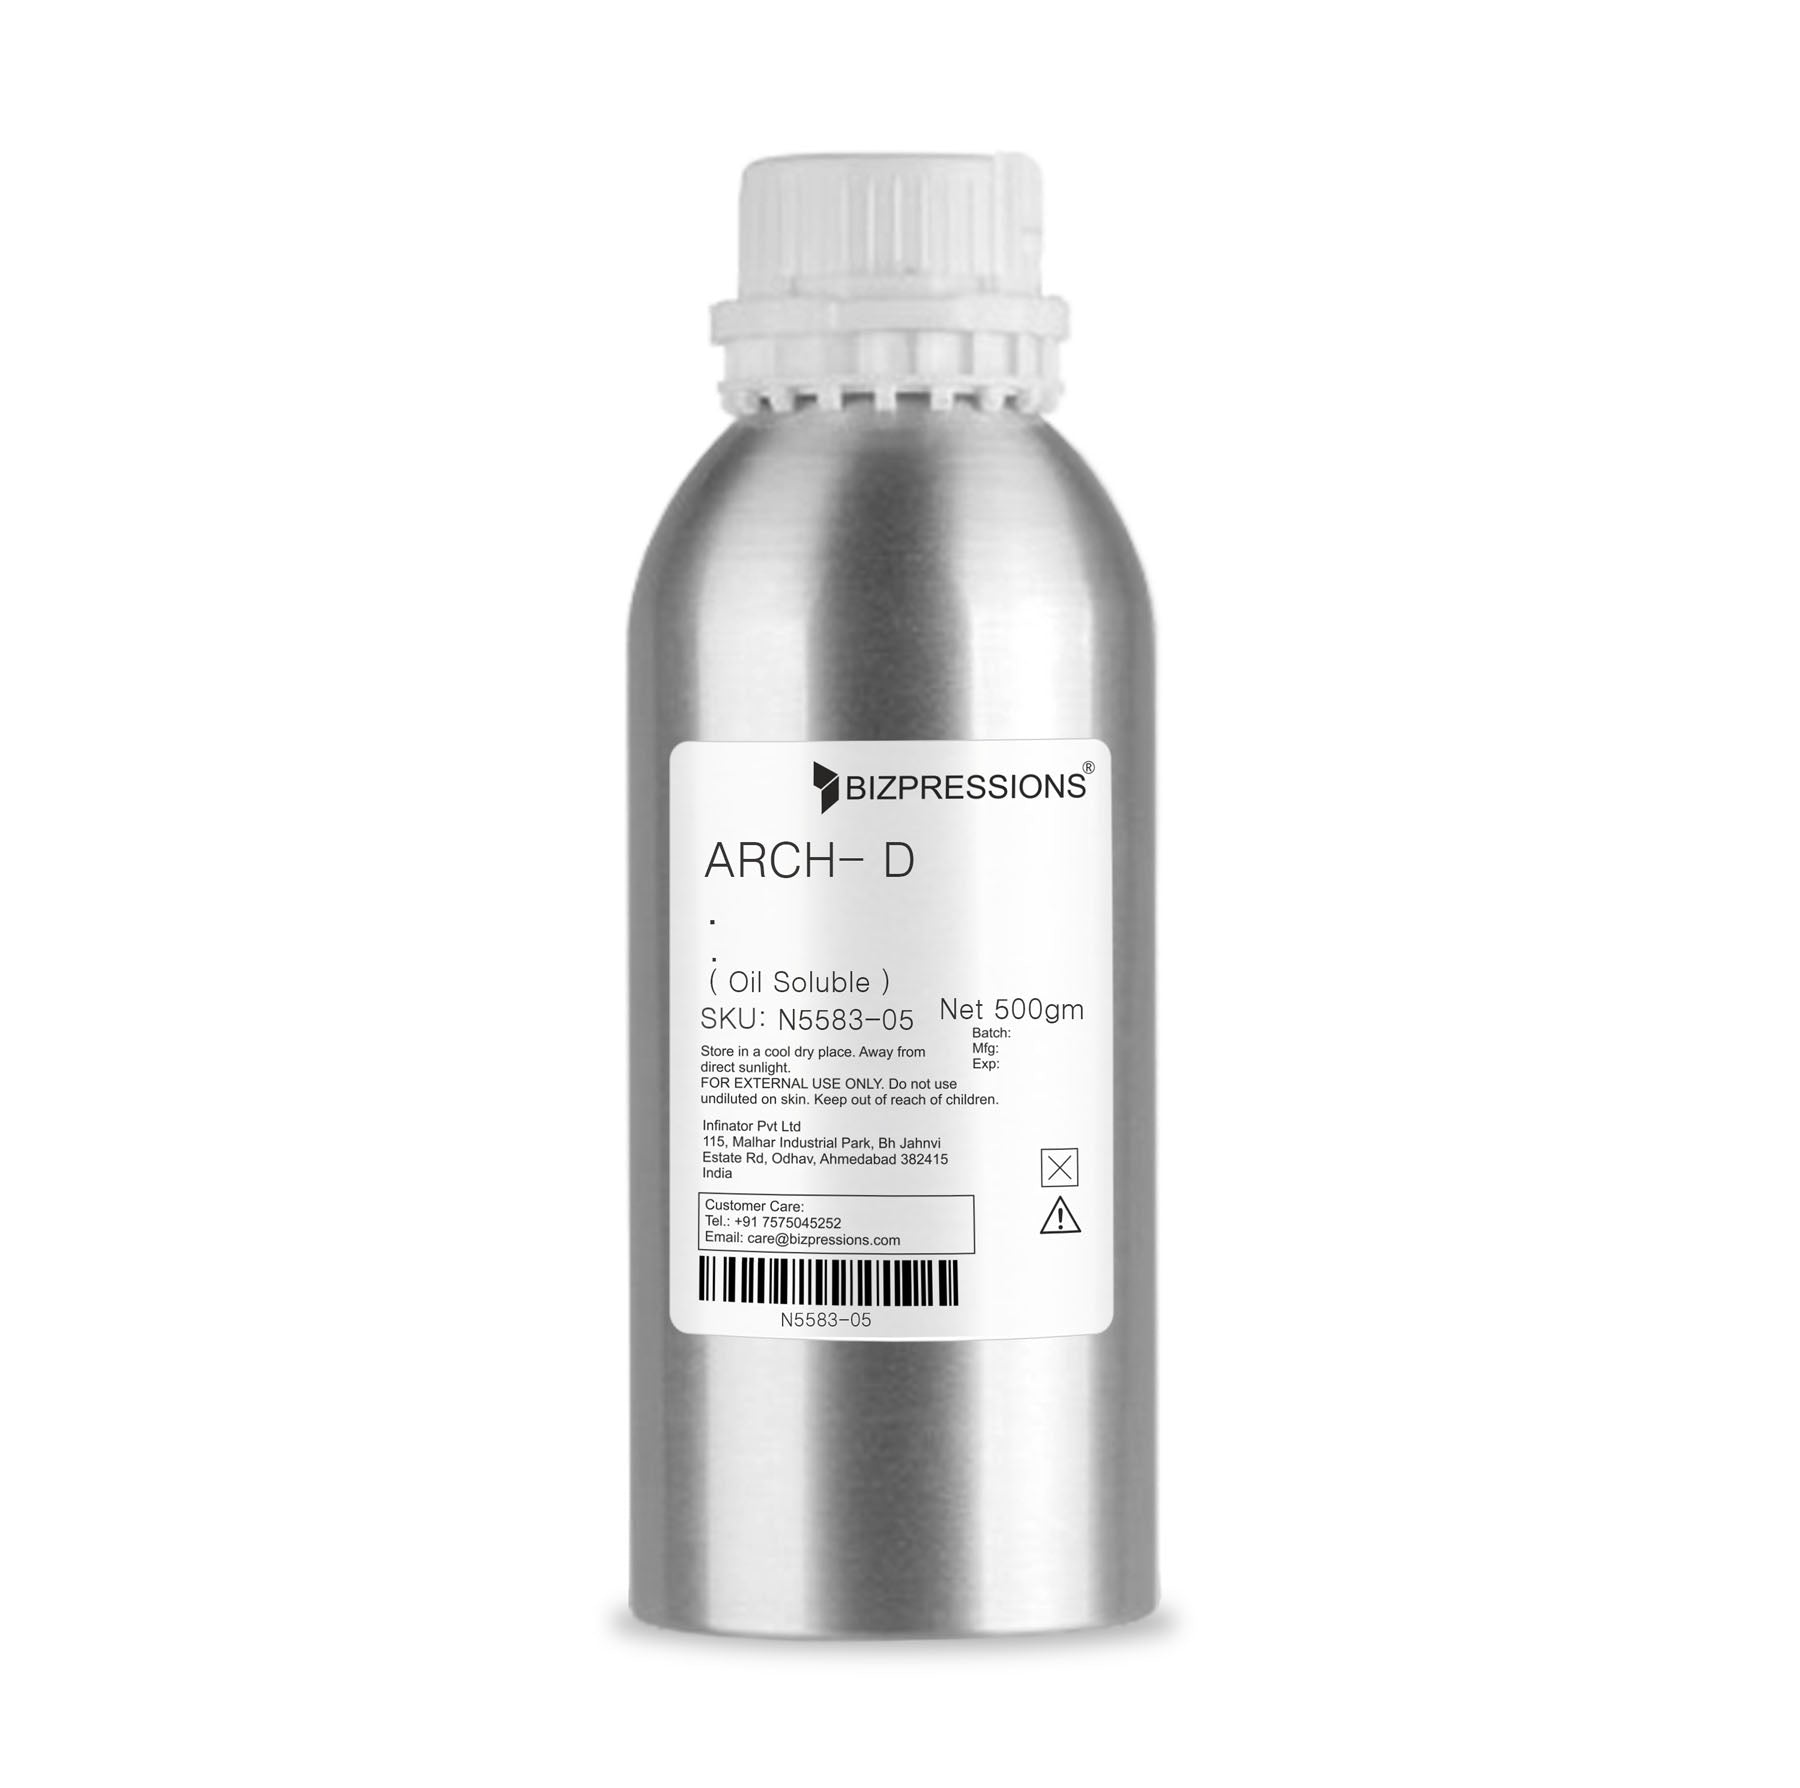 ARCH- D - Fragrance ( Oil Soluble ) - 500 gm